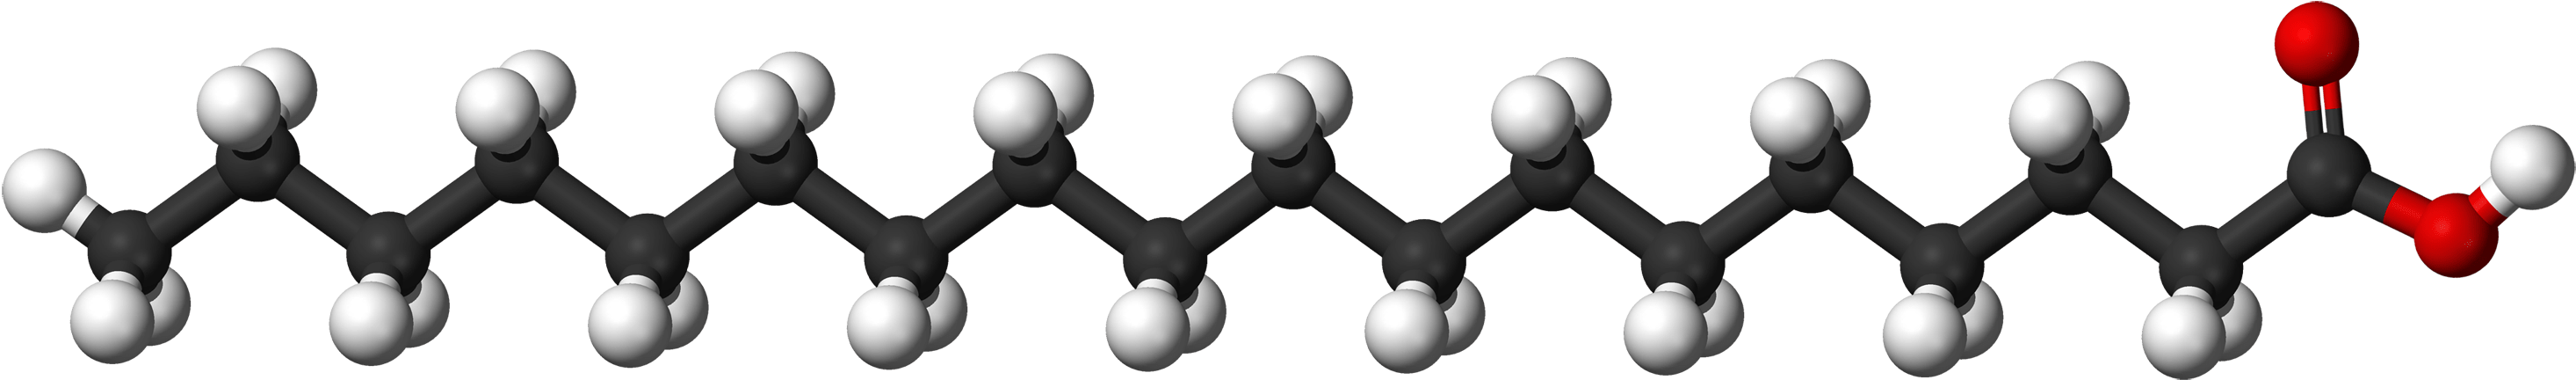 Fatty Acid Molecule Structure PNG image